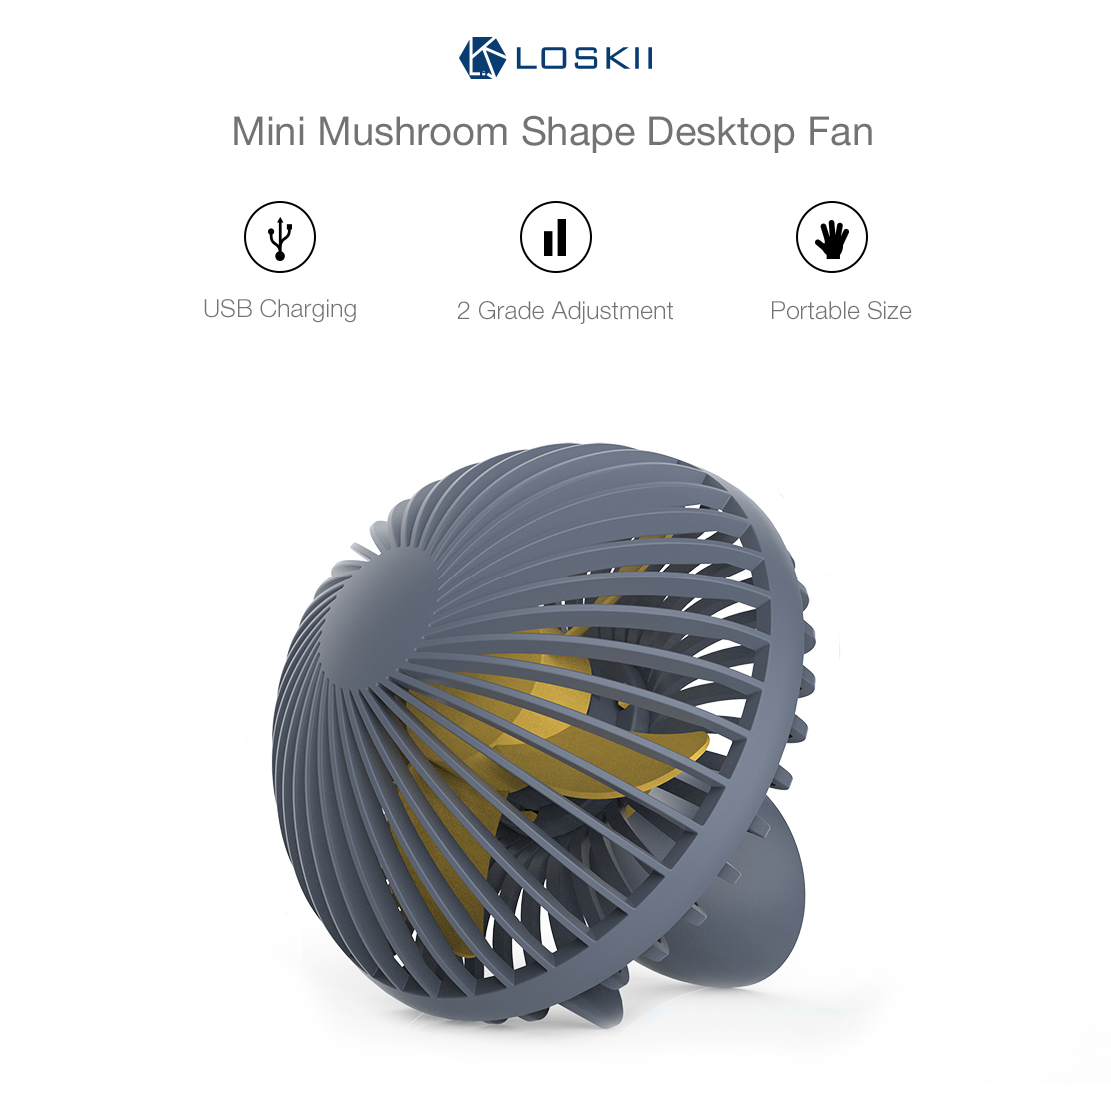 Loskii HF-200 Portable Mini Electronic Desktop Mushroom Shape Summer Cooling Fan 2 Grade Adjustment USB Charging Fan 40